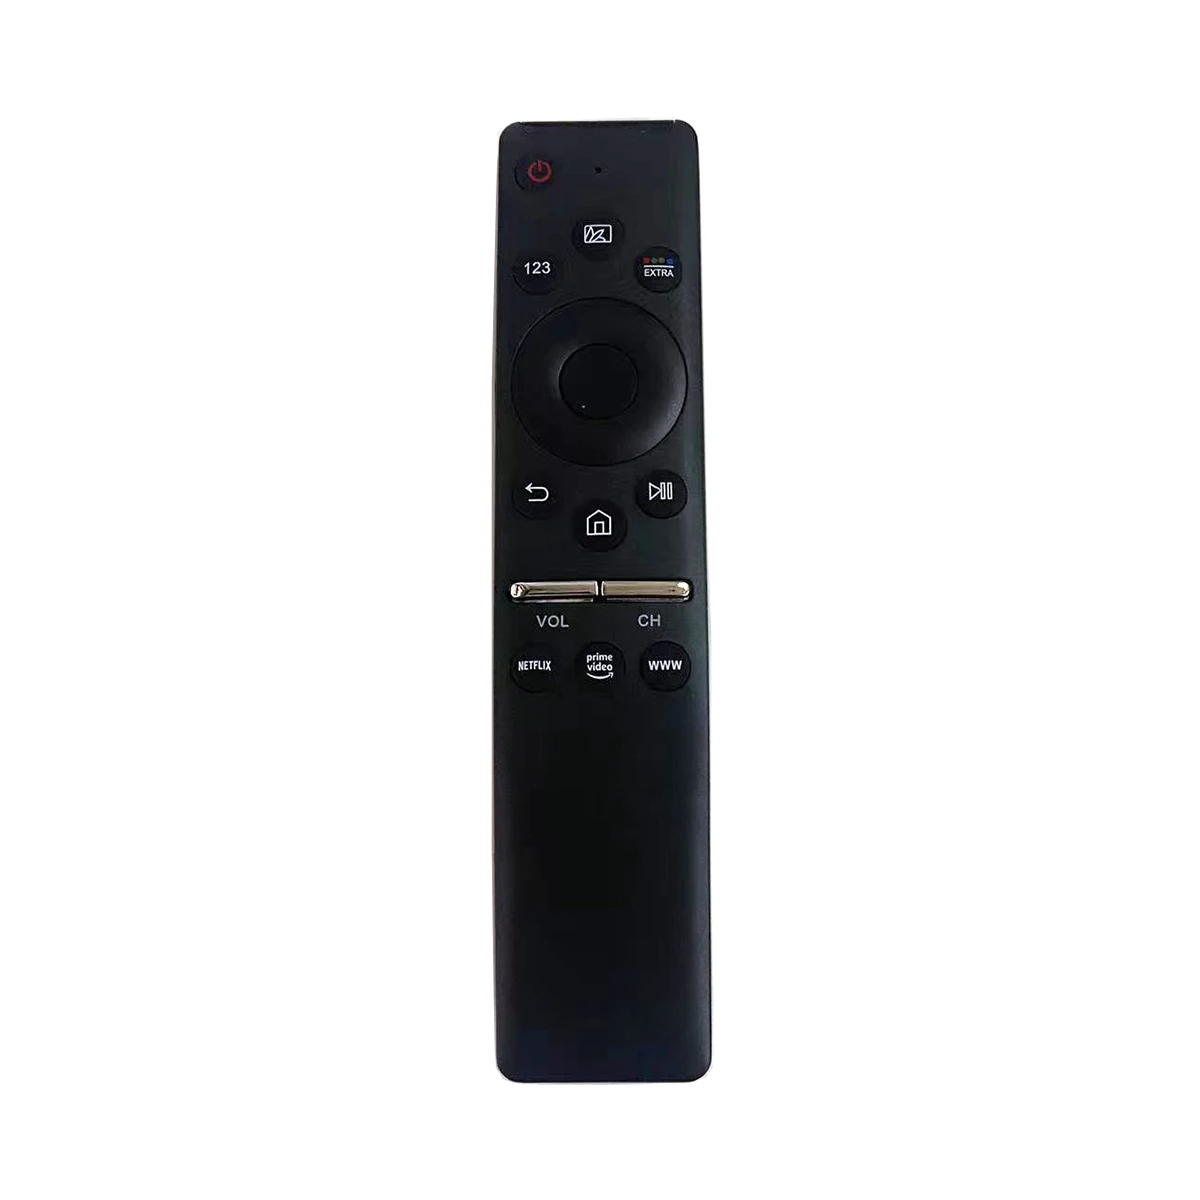 Replacement Remote Control for Samsung 4K Smart TV BN59-01241A BN59-01259D BN59-01242A BN59-01298E BN59-01298L BN59-01298H